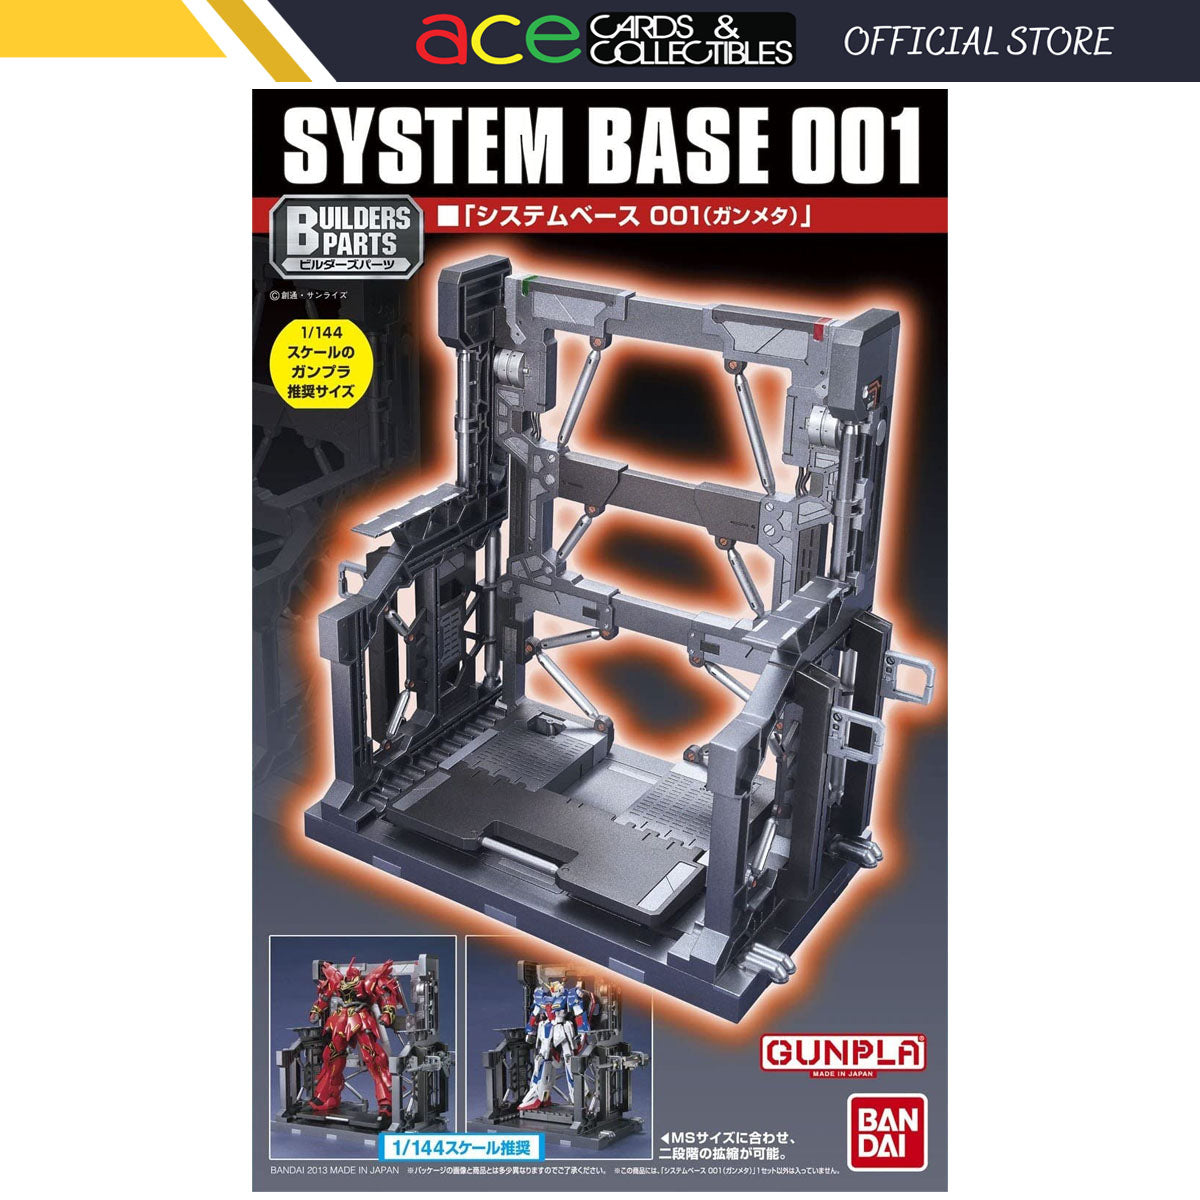 Gunpla Builders Parts System Base 001 (Gunmetallic)-Bandai-Ace Cards & Collectibles